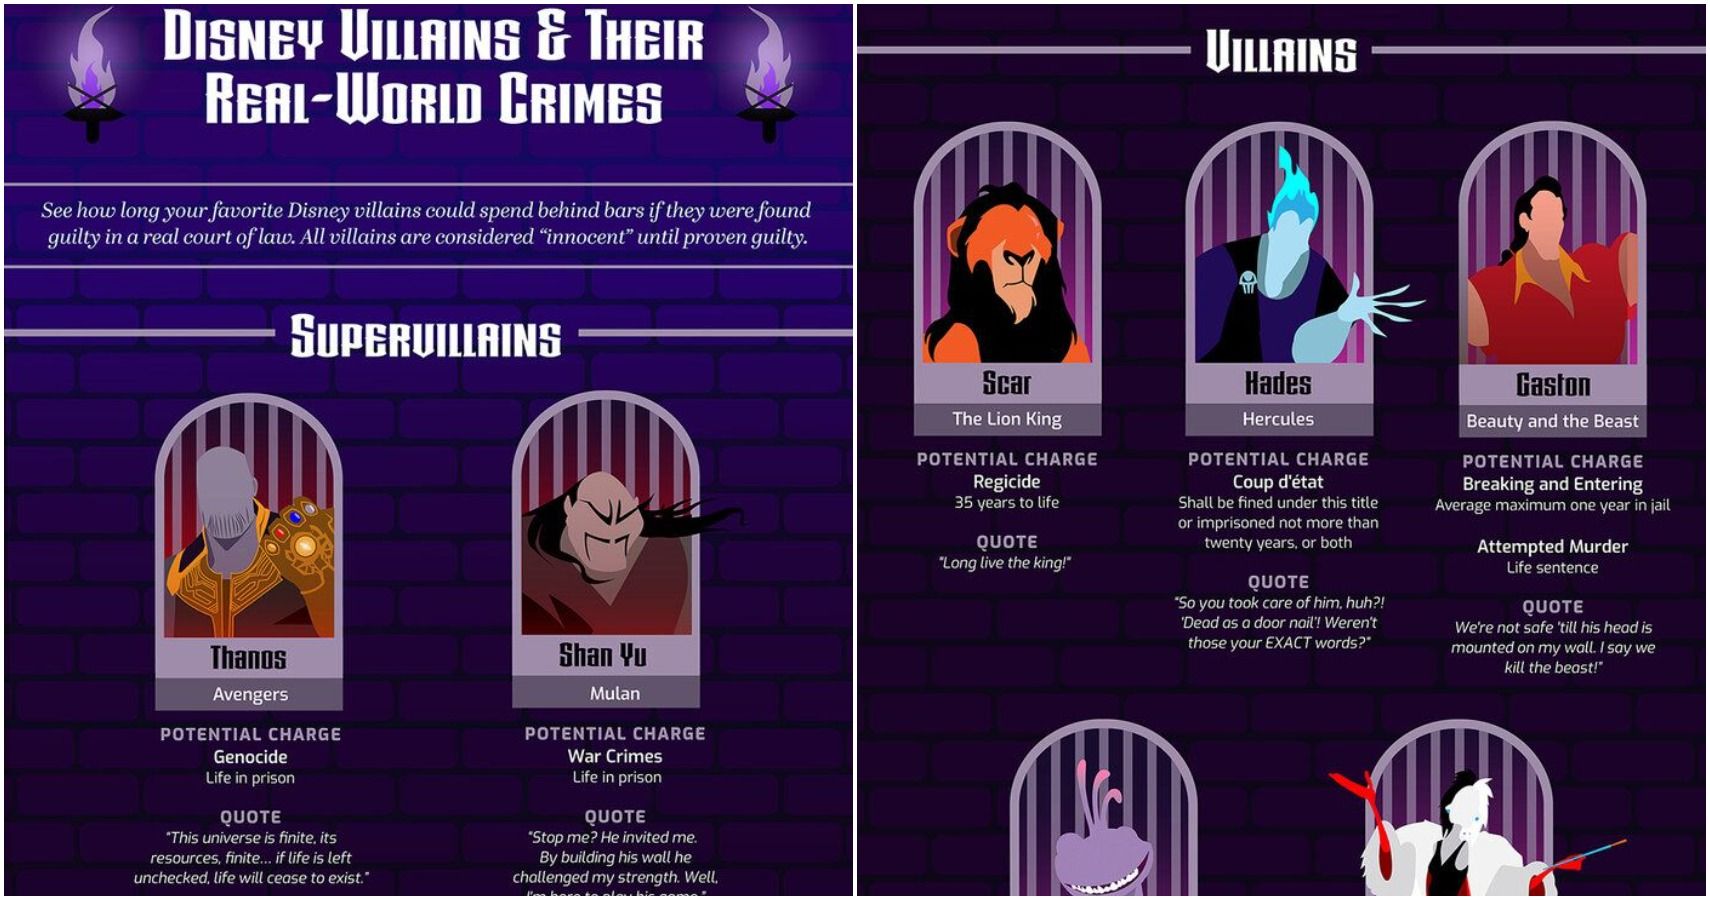 Someone Broke Down How Much Jail Time Each Disney Villain Should Do